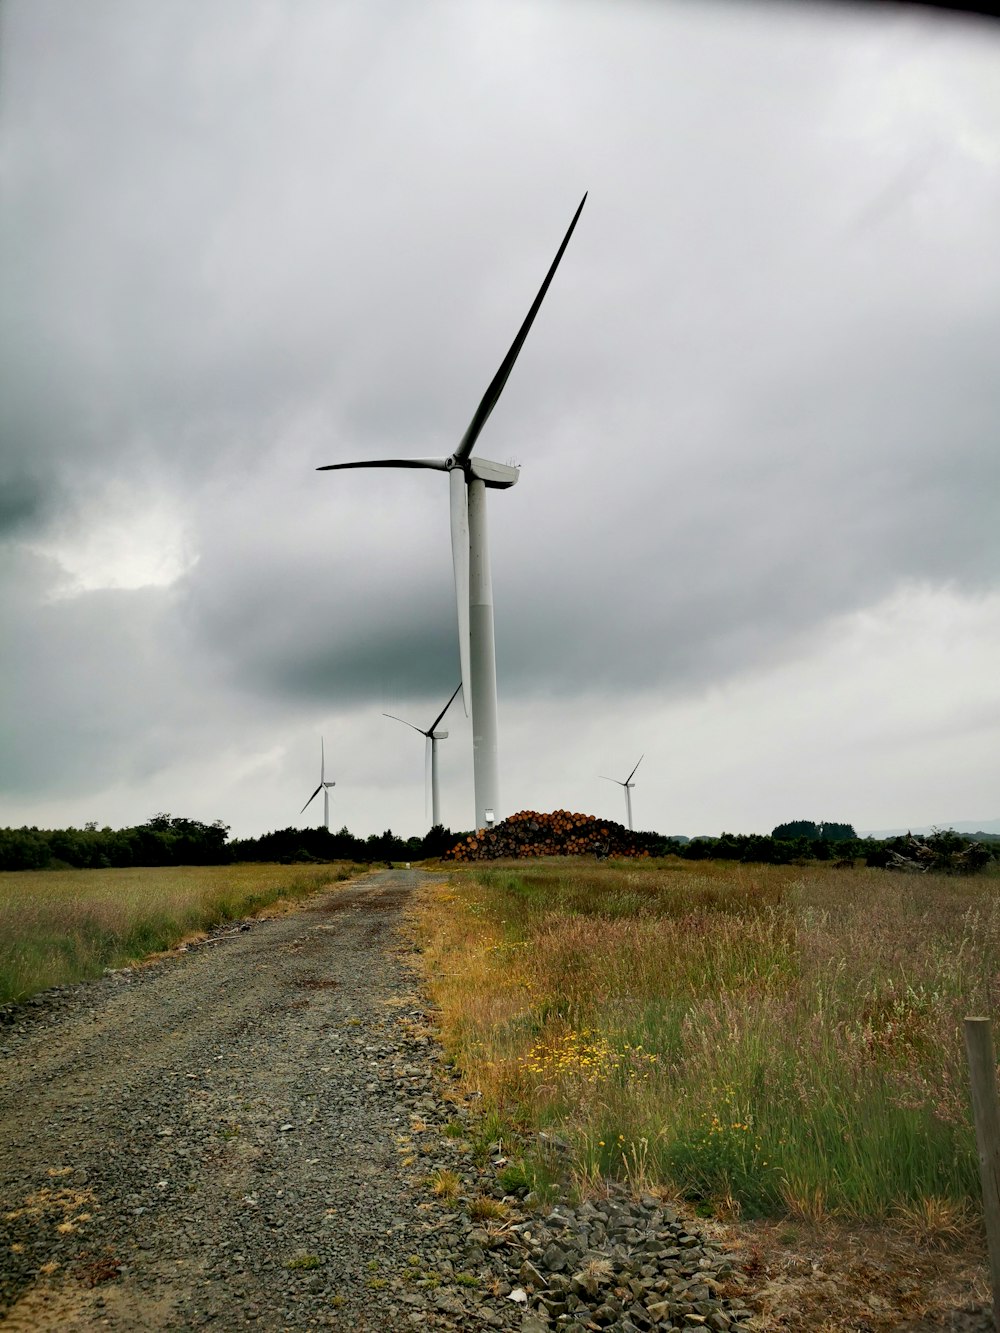 white wind turbine on green grass field under gray cloudy sky